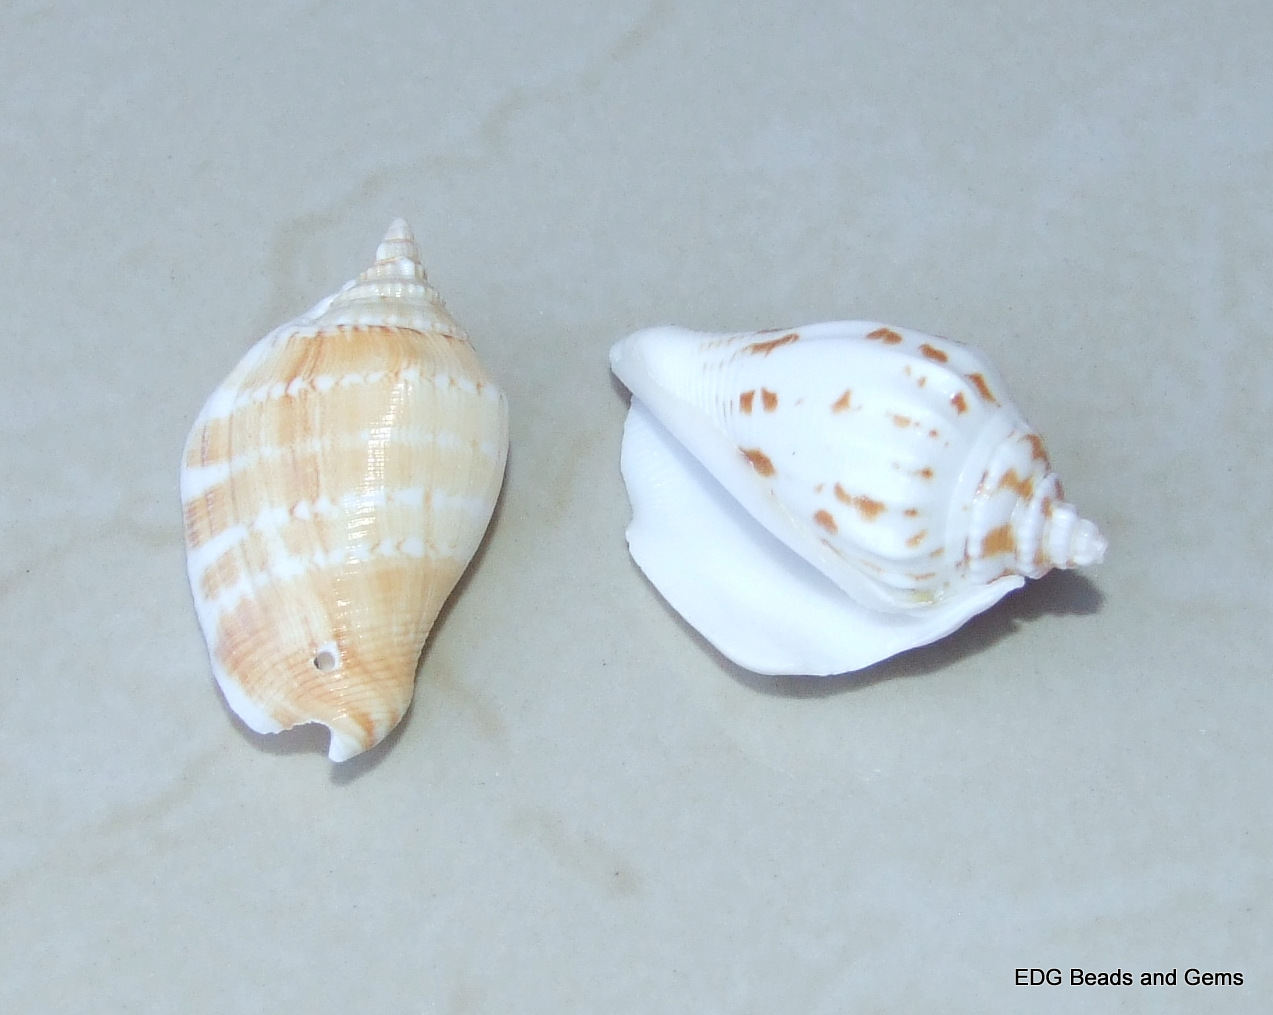 4 Large Natural Conch Sea Shell, Spiral Shell Bead, Seashell, Shell Bead, Beach Decor, Ocean Shells, Shell Jewelry, 40mm - 45mm, 007-57